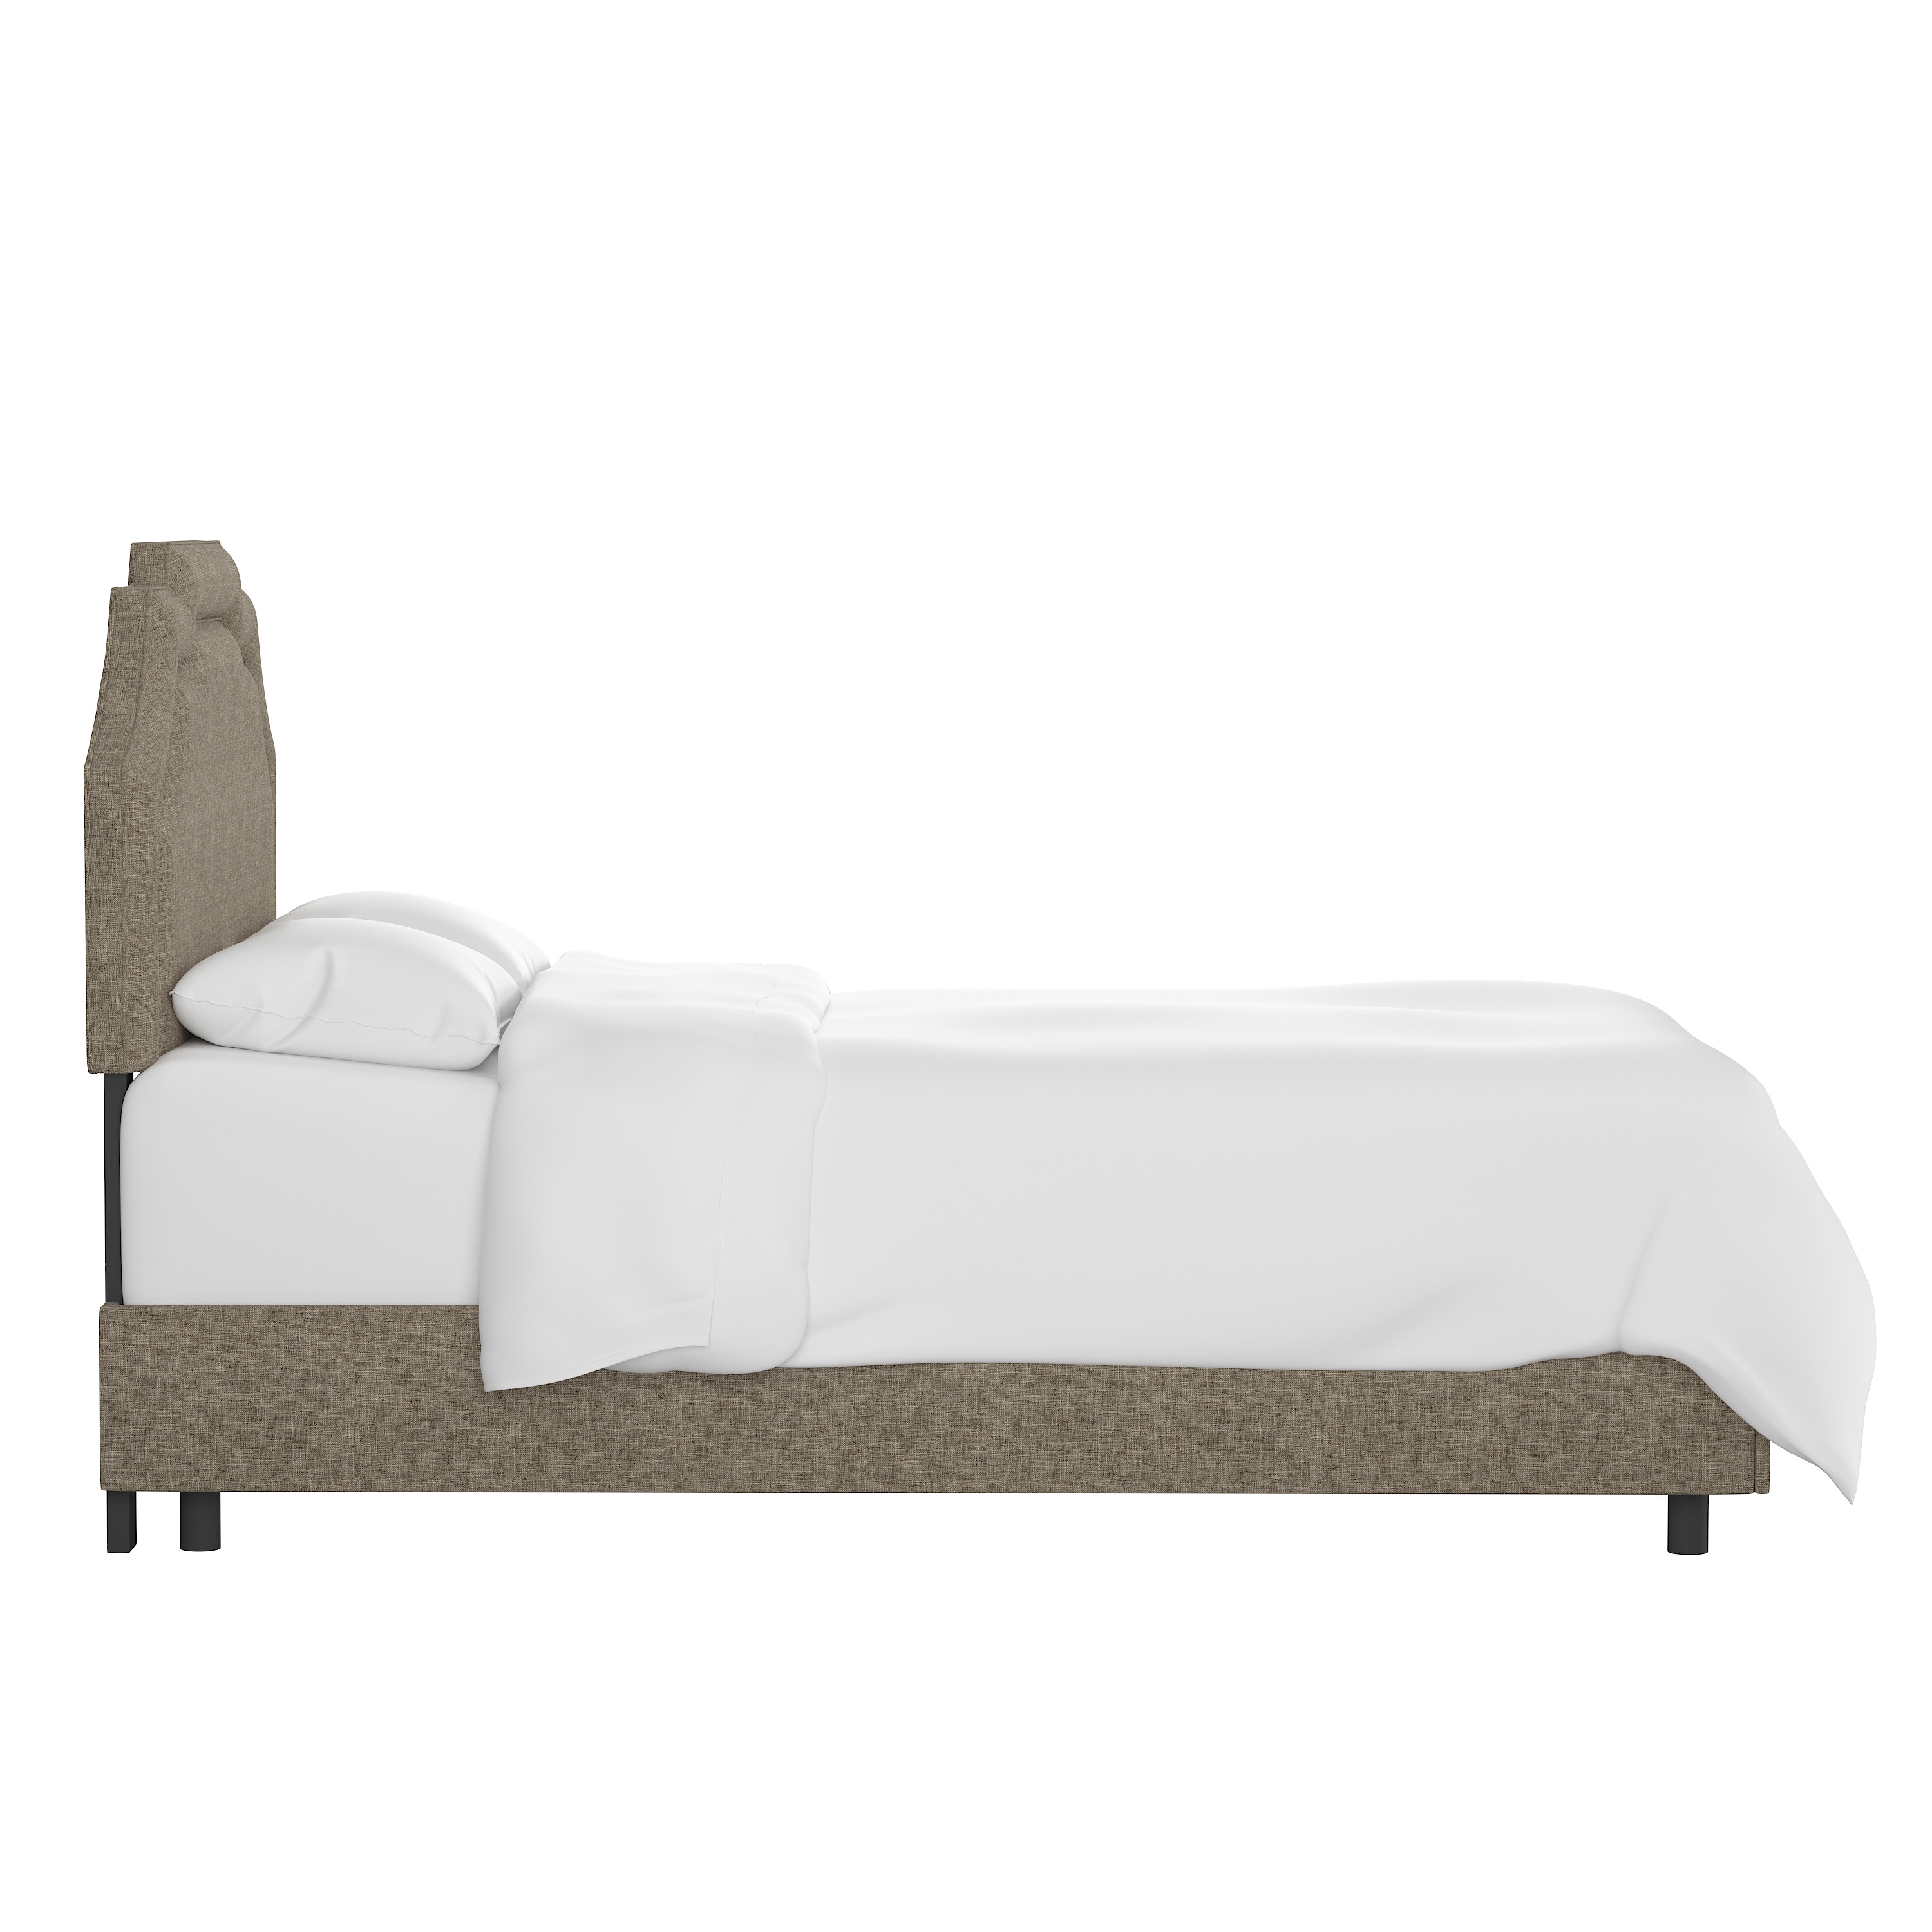 Full Leona Bed - Image 2